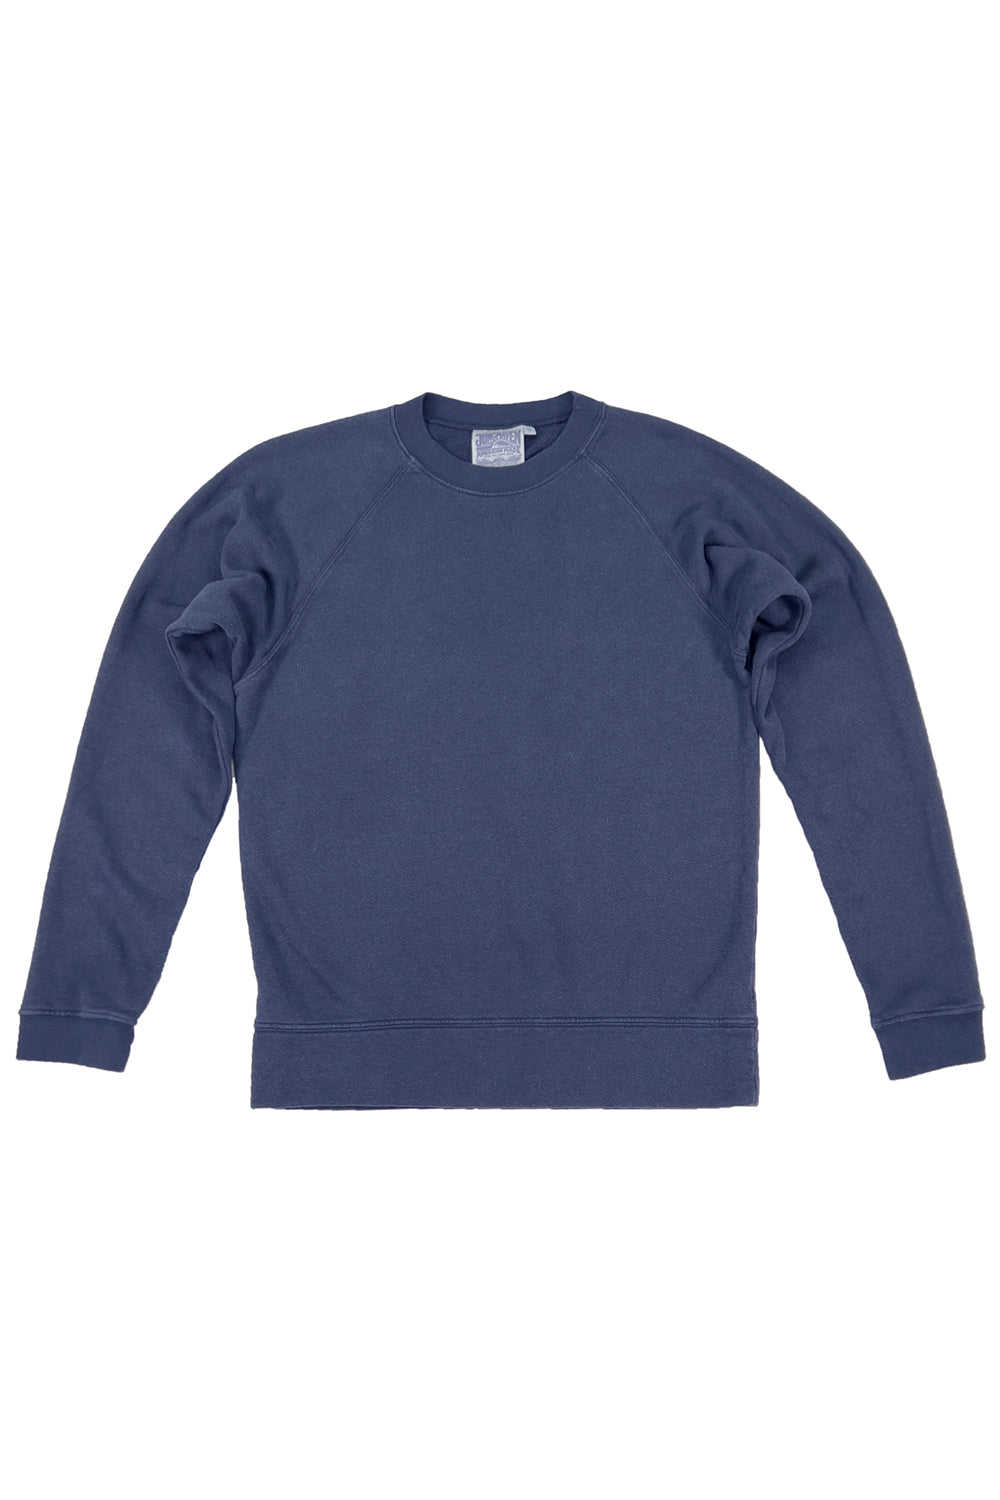 Sierra Raglan Sweatshirt | Jungmaven Hemp Clothing & Accessories / Color: Navy